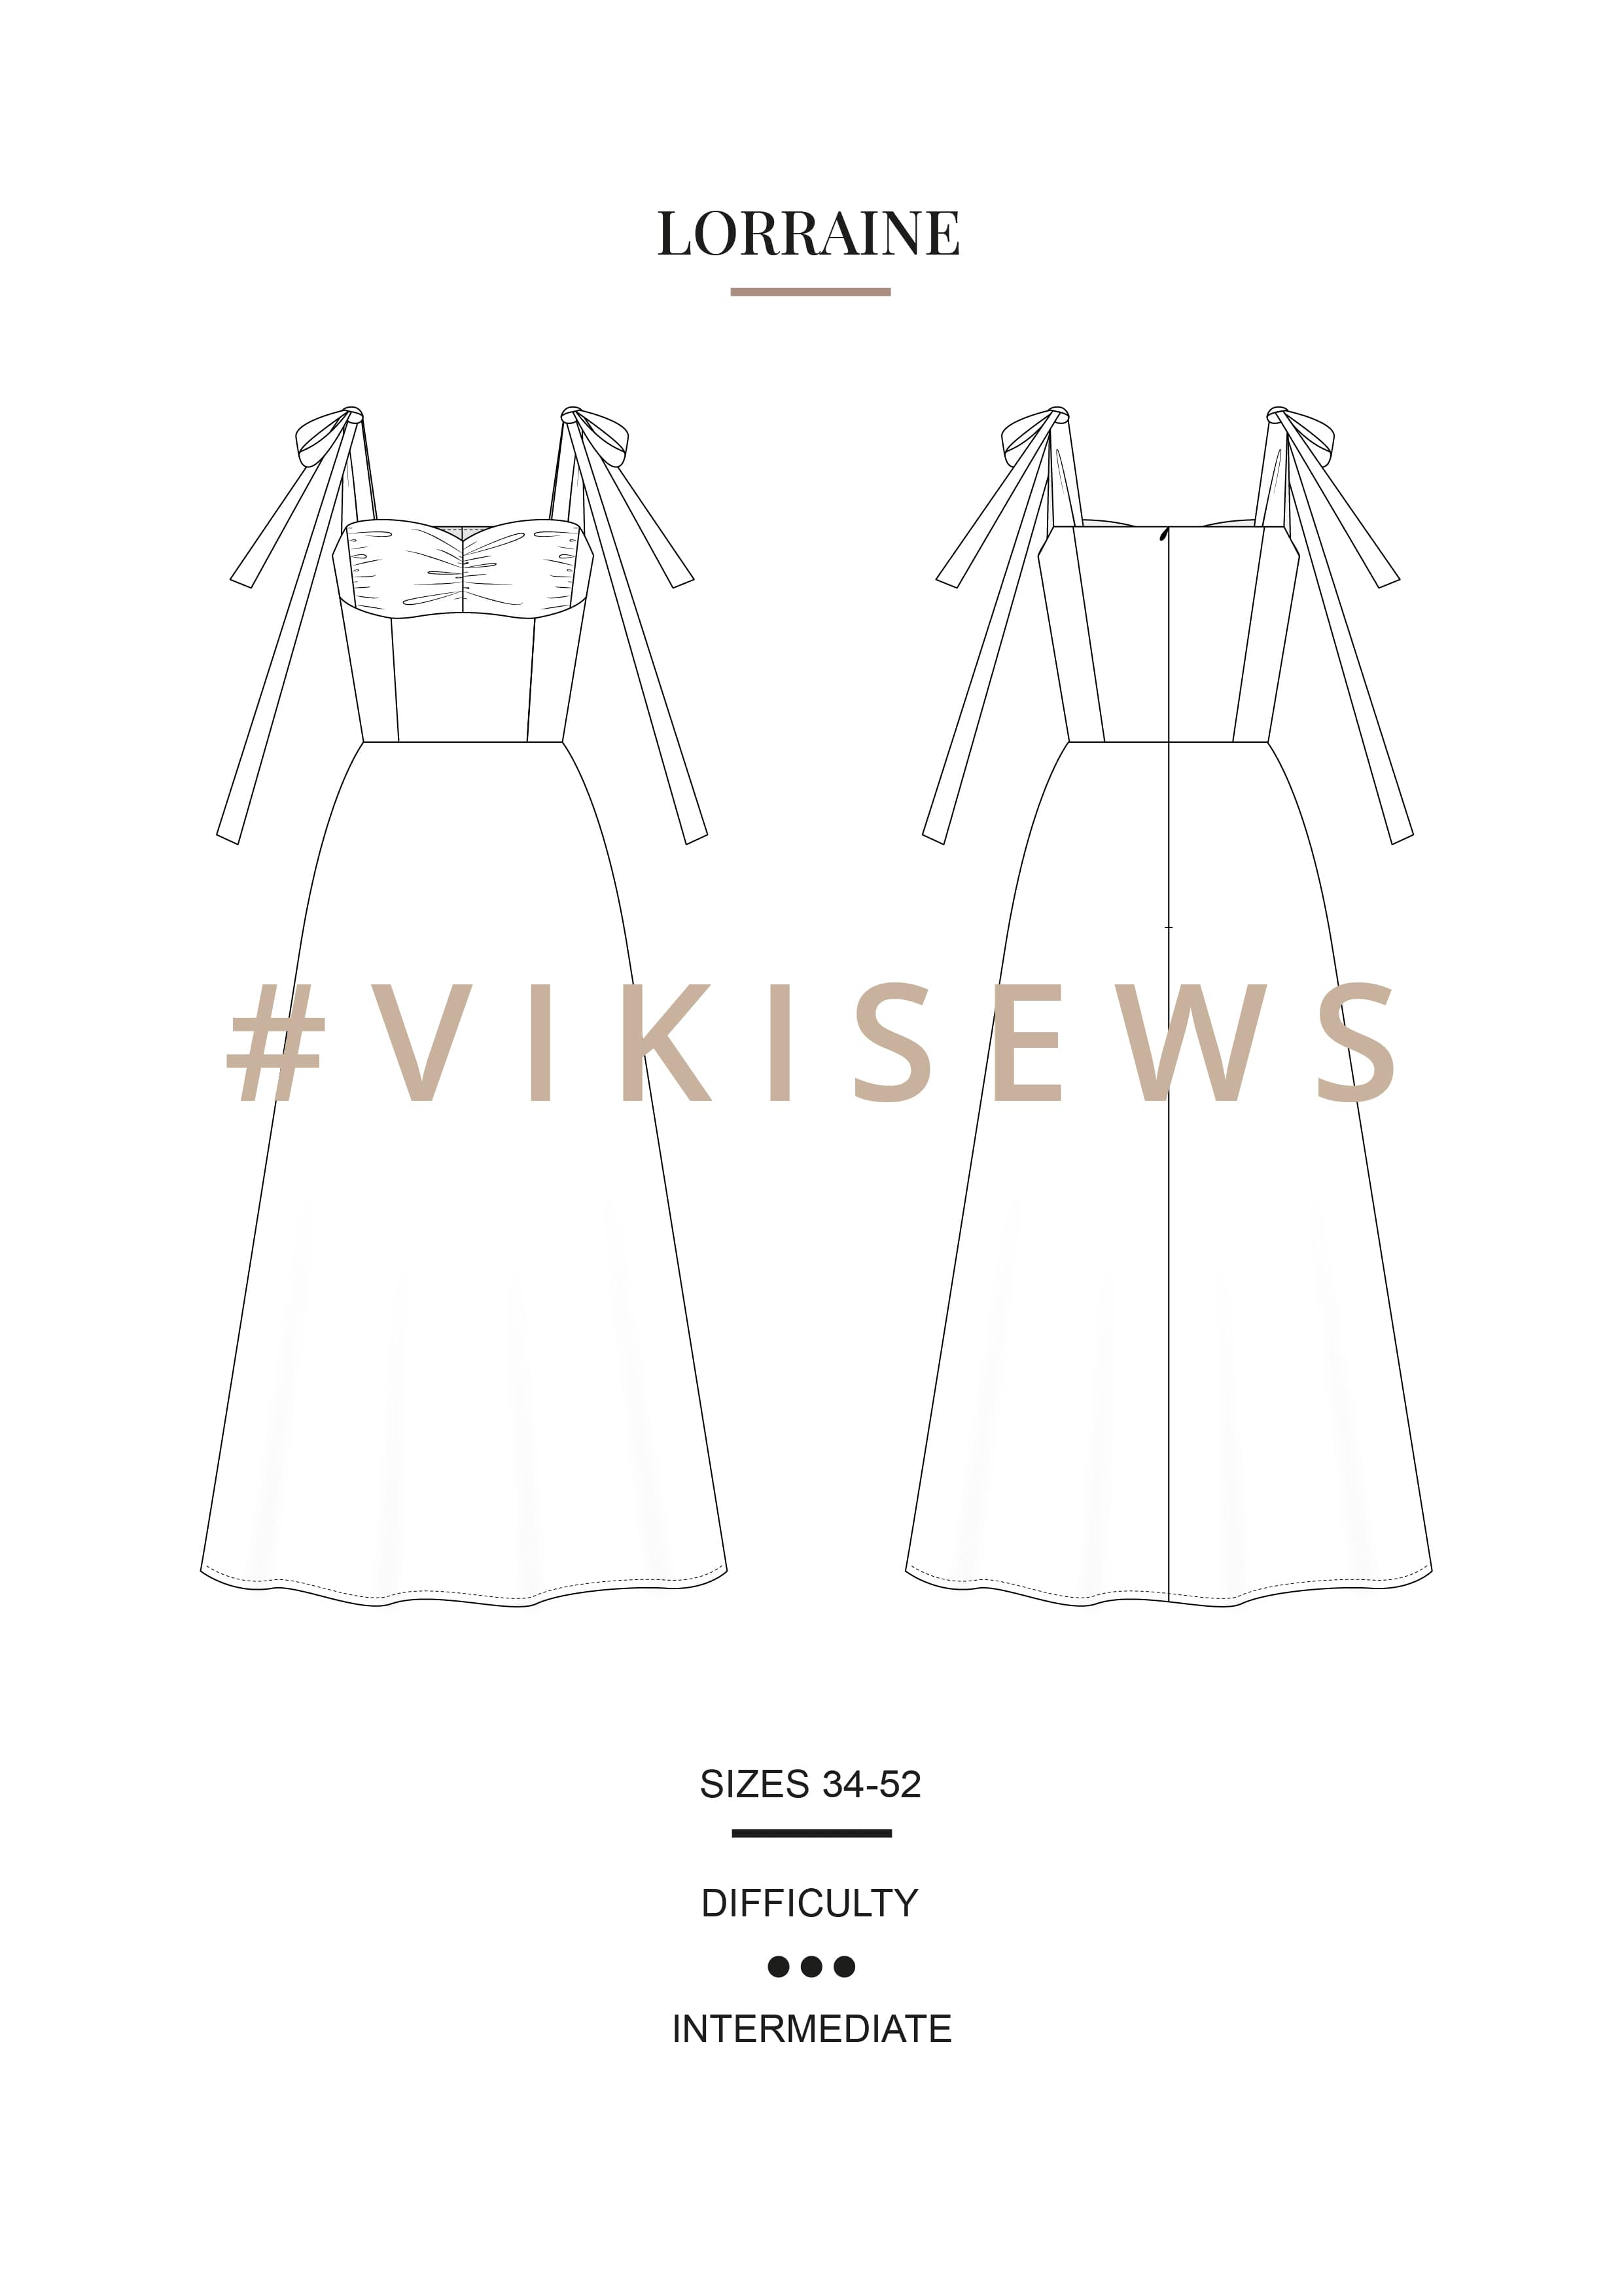 Patterns :: Women's patterns :: Dresses :: Vikisews Lorraine dress ...